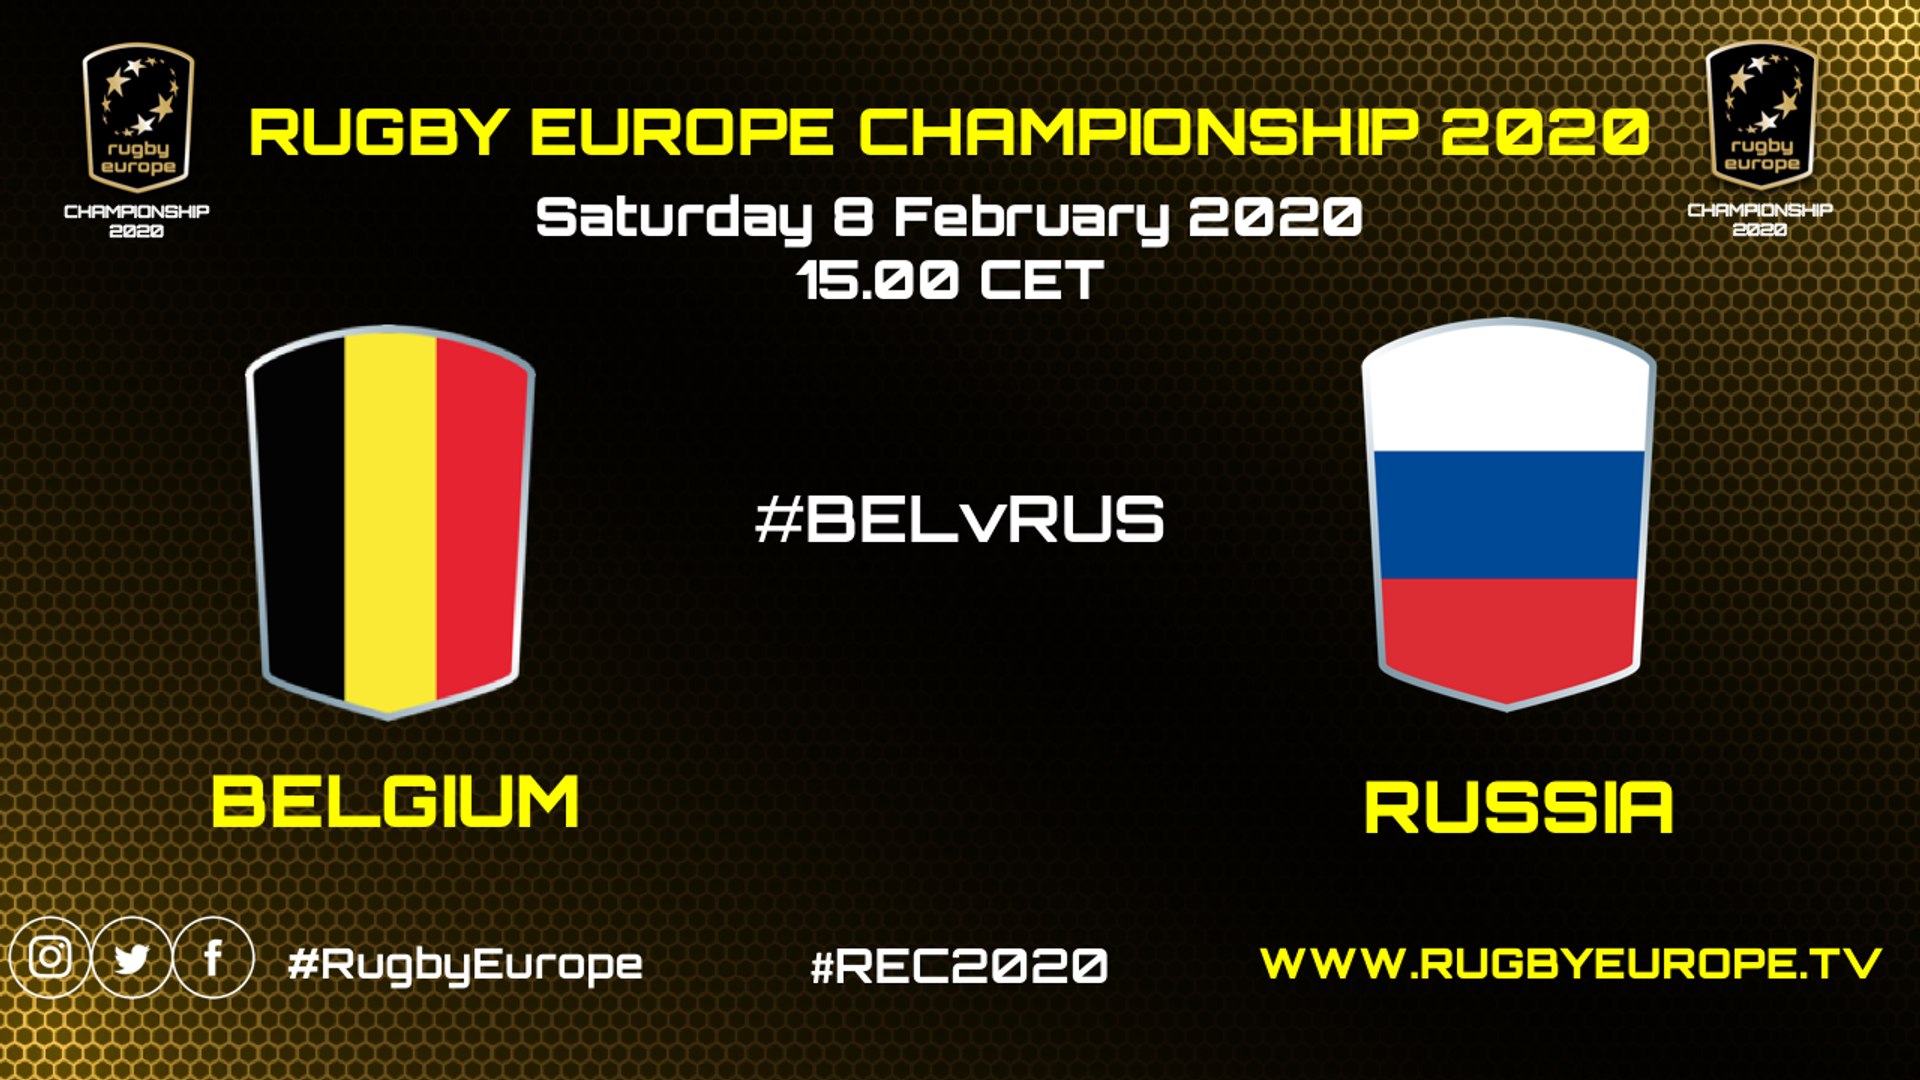 BELGIUM / RUSSIA - RUGBY EUROPE CHAMPIONSHIP 2020